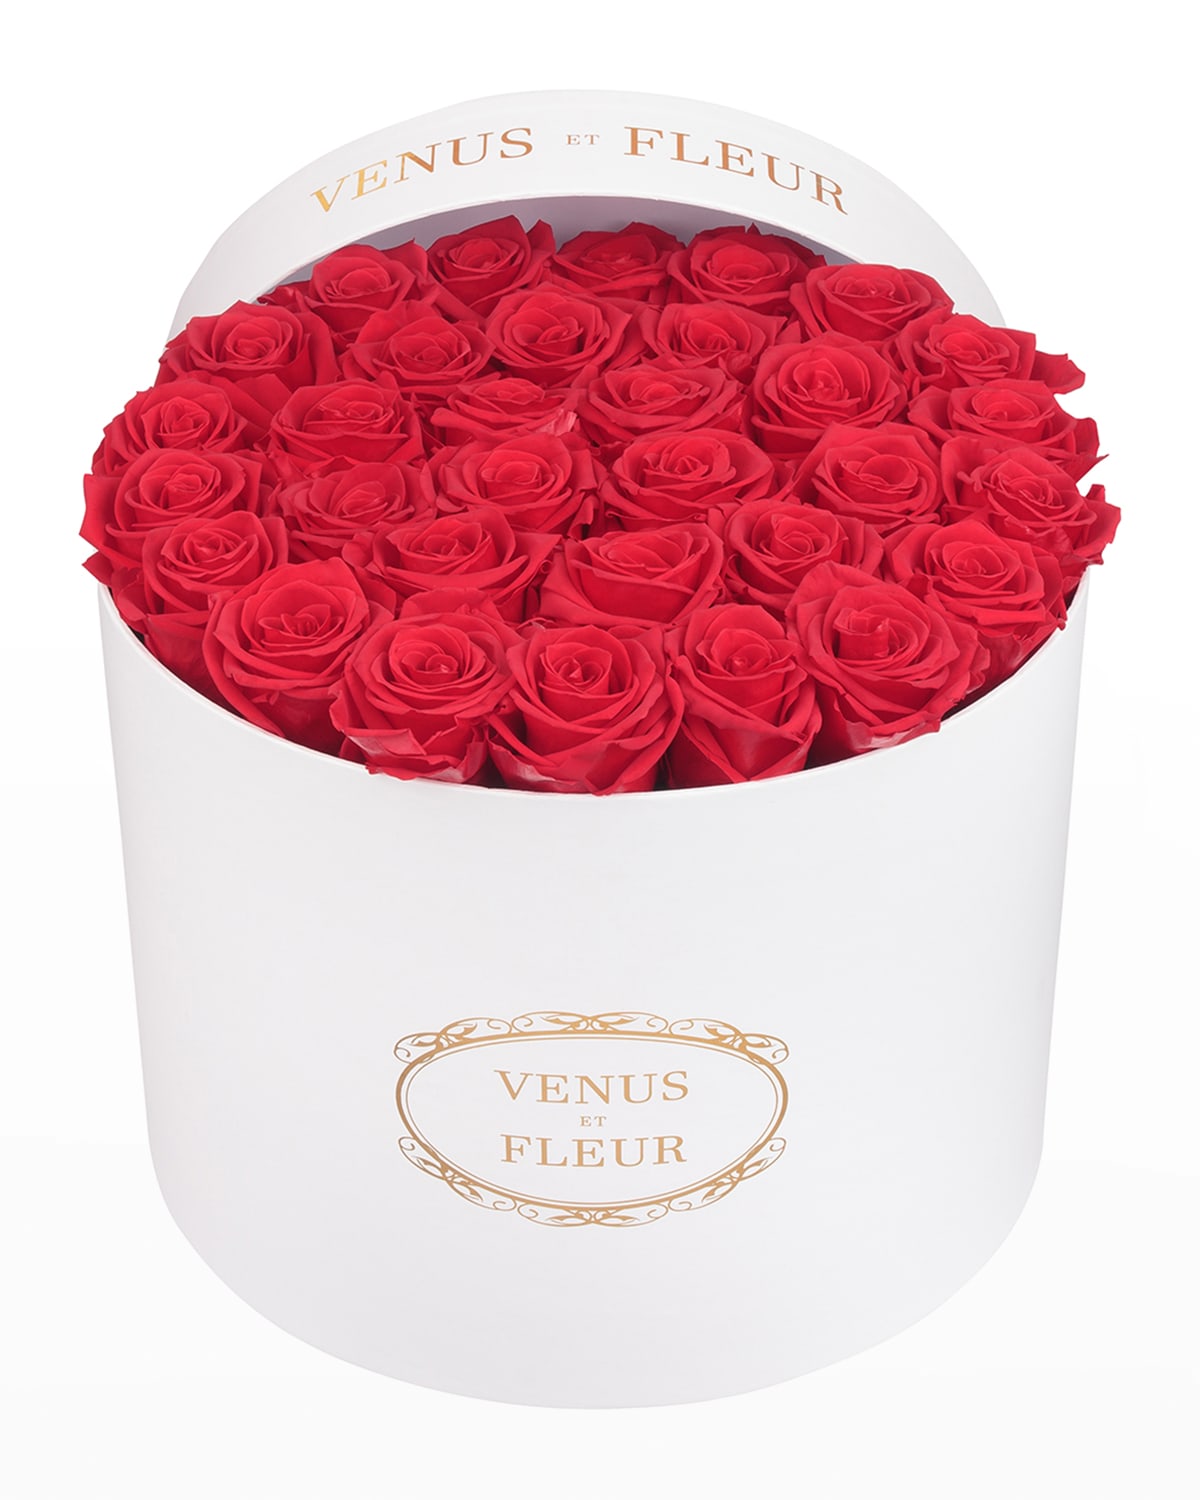 VENUS ET FLEUR CLASSIC LARGE ROUND ROSE BOX,PROD225980030